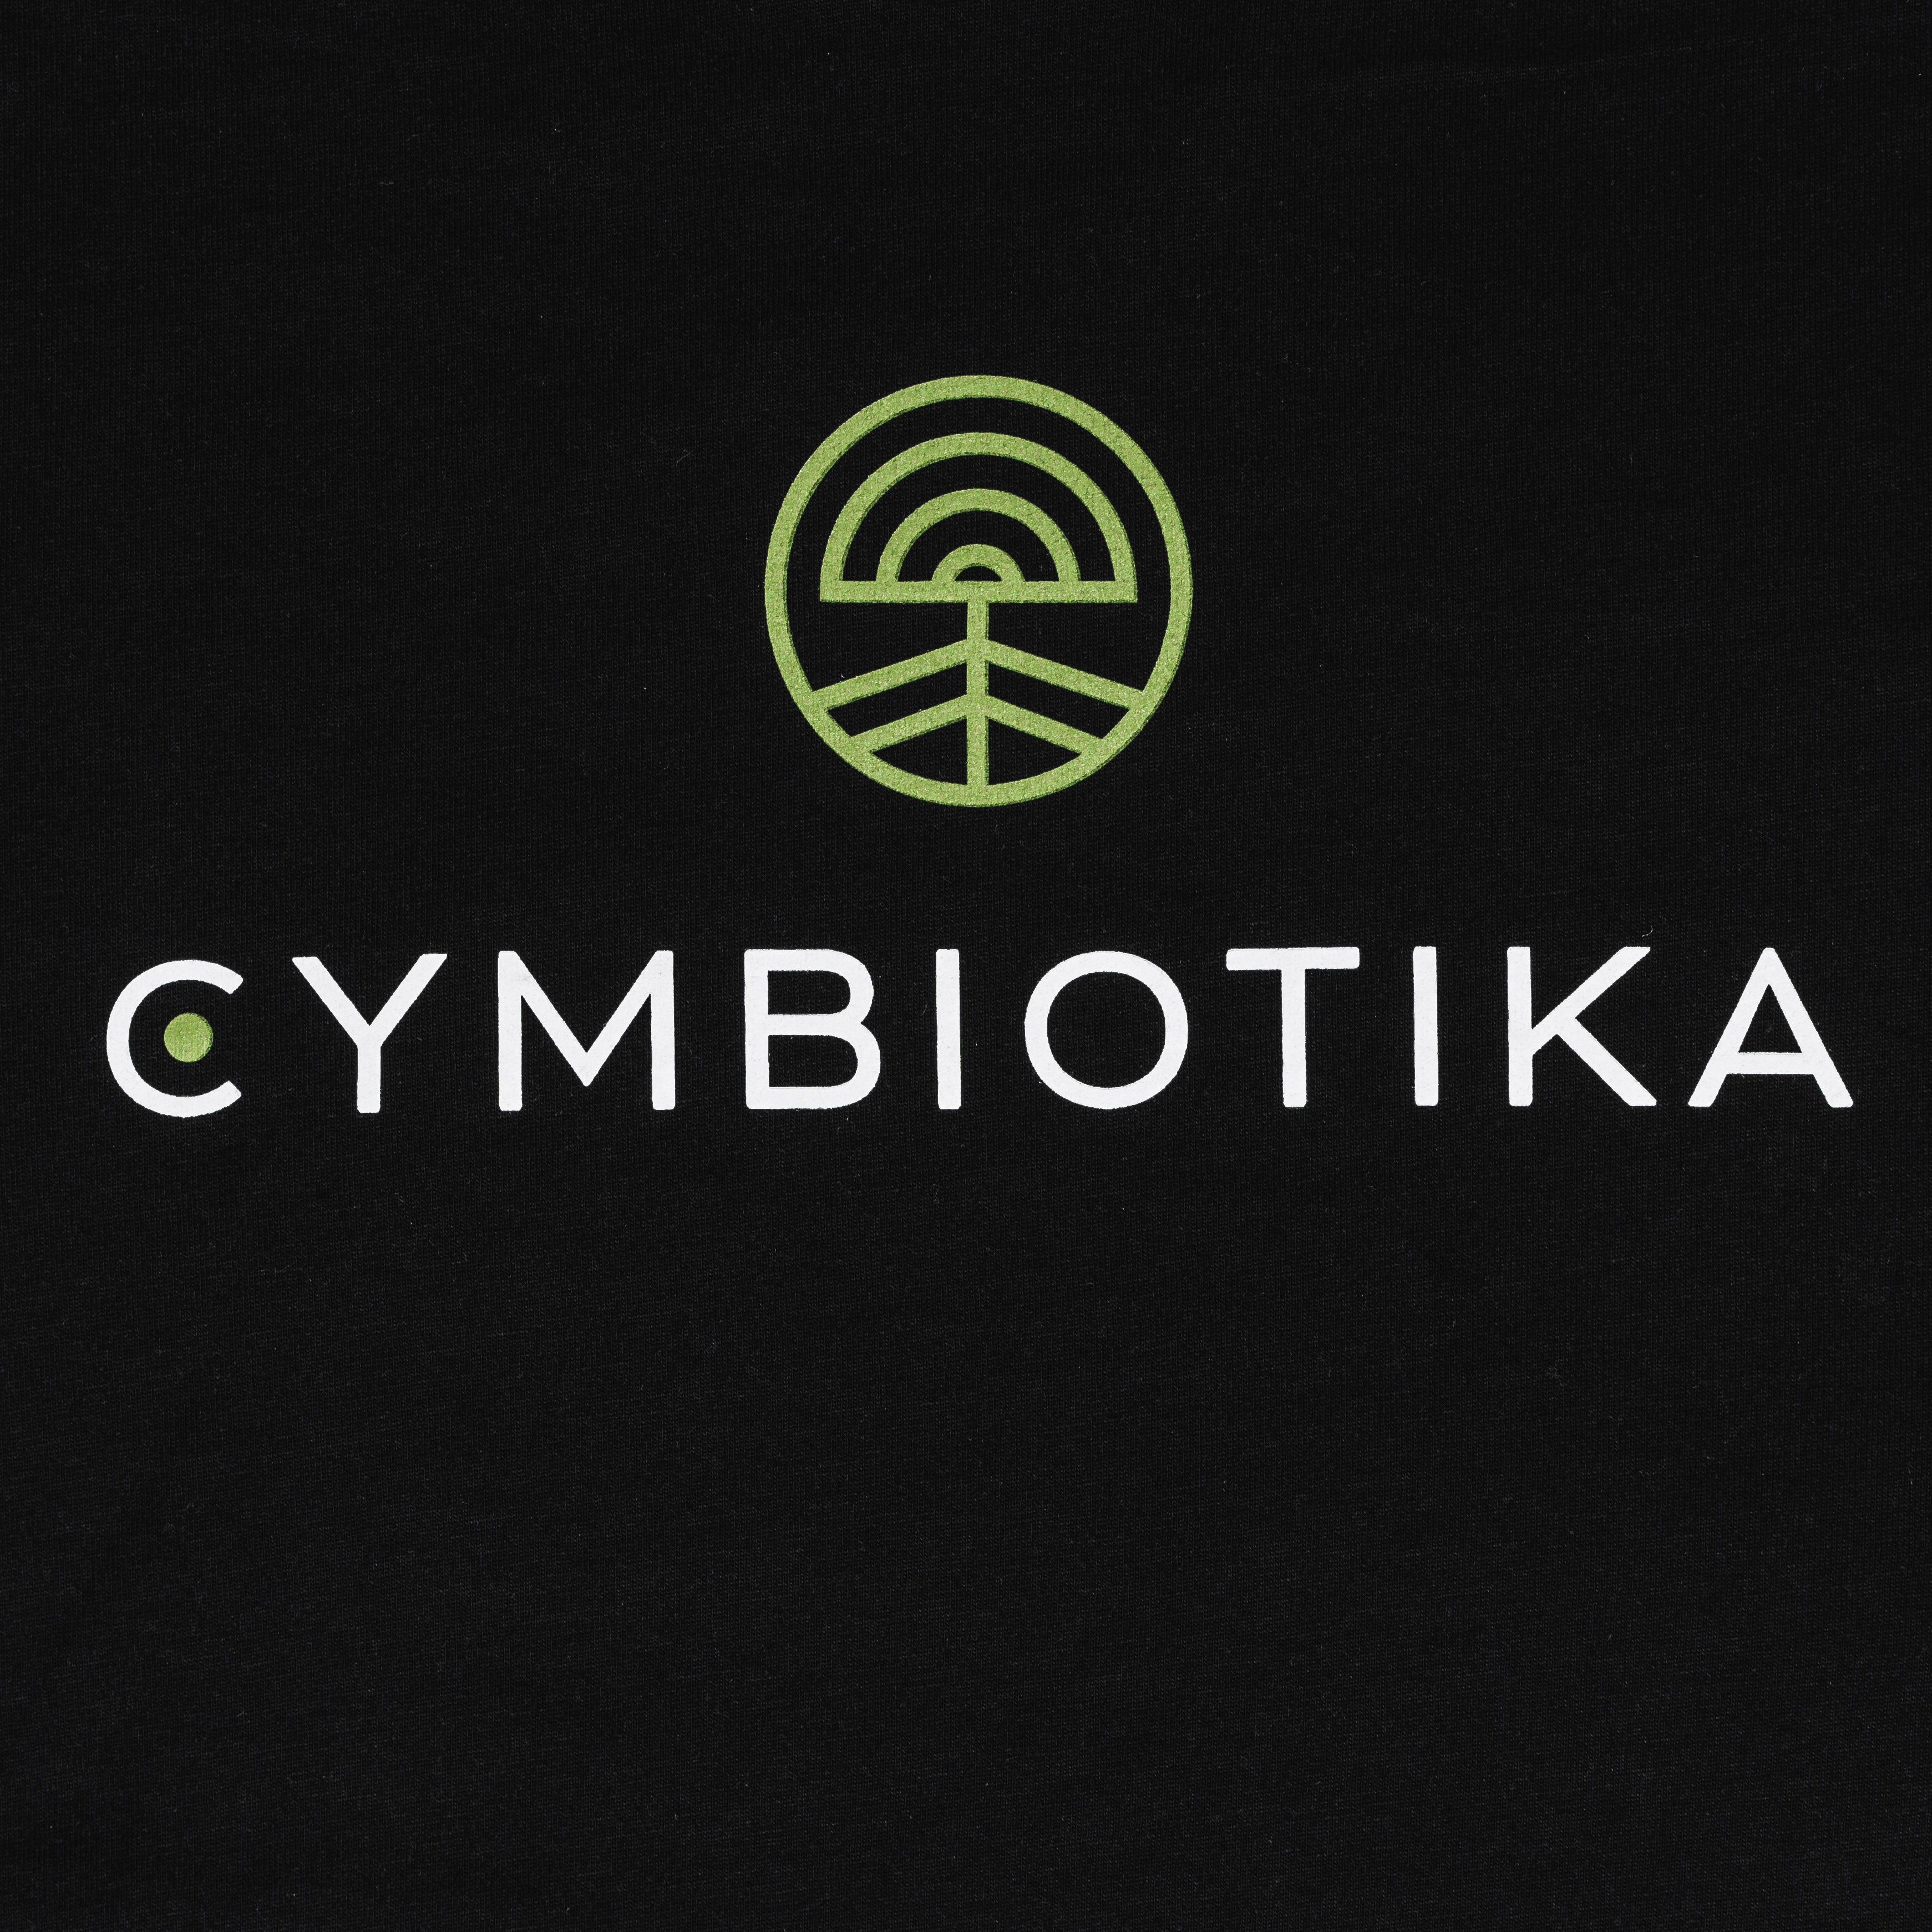 Cymbiotika Premium Branded T-Shirt Black Zoomed In